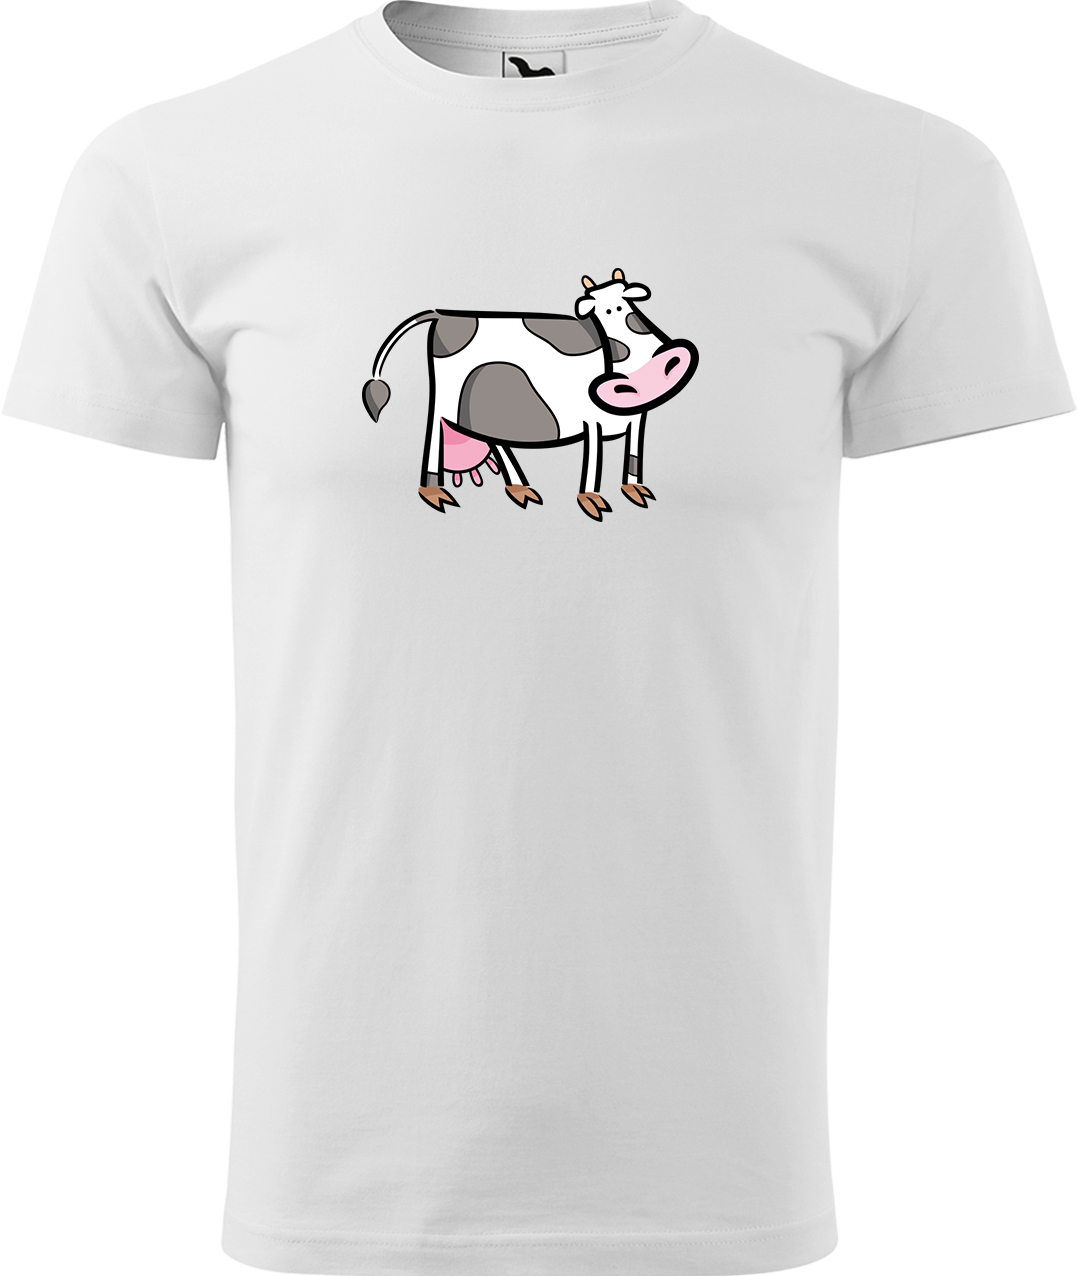 Pánské tričko s krávou - Kravička Velikost: S, Barva: Bílá (00), Střih: pánský